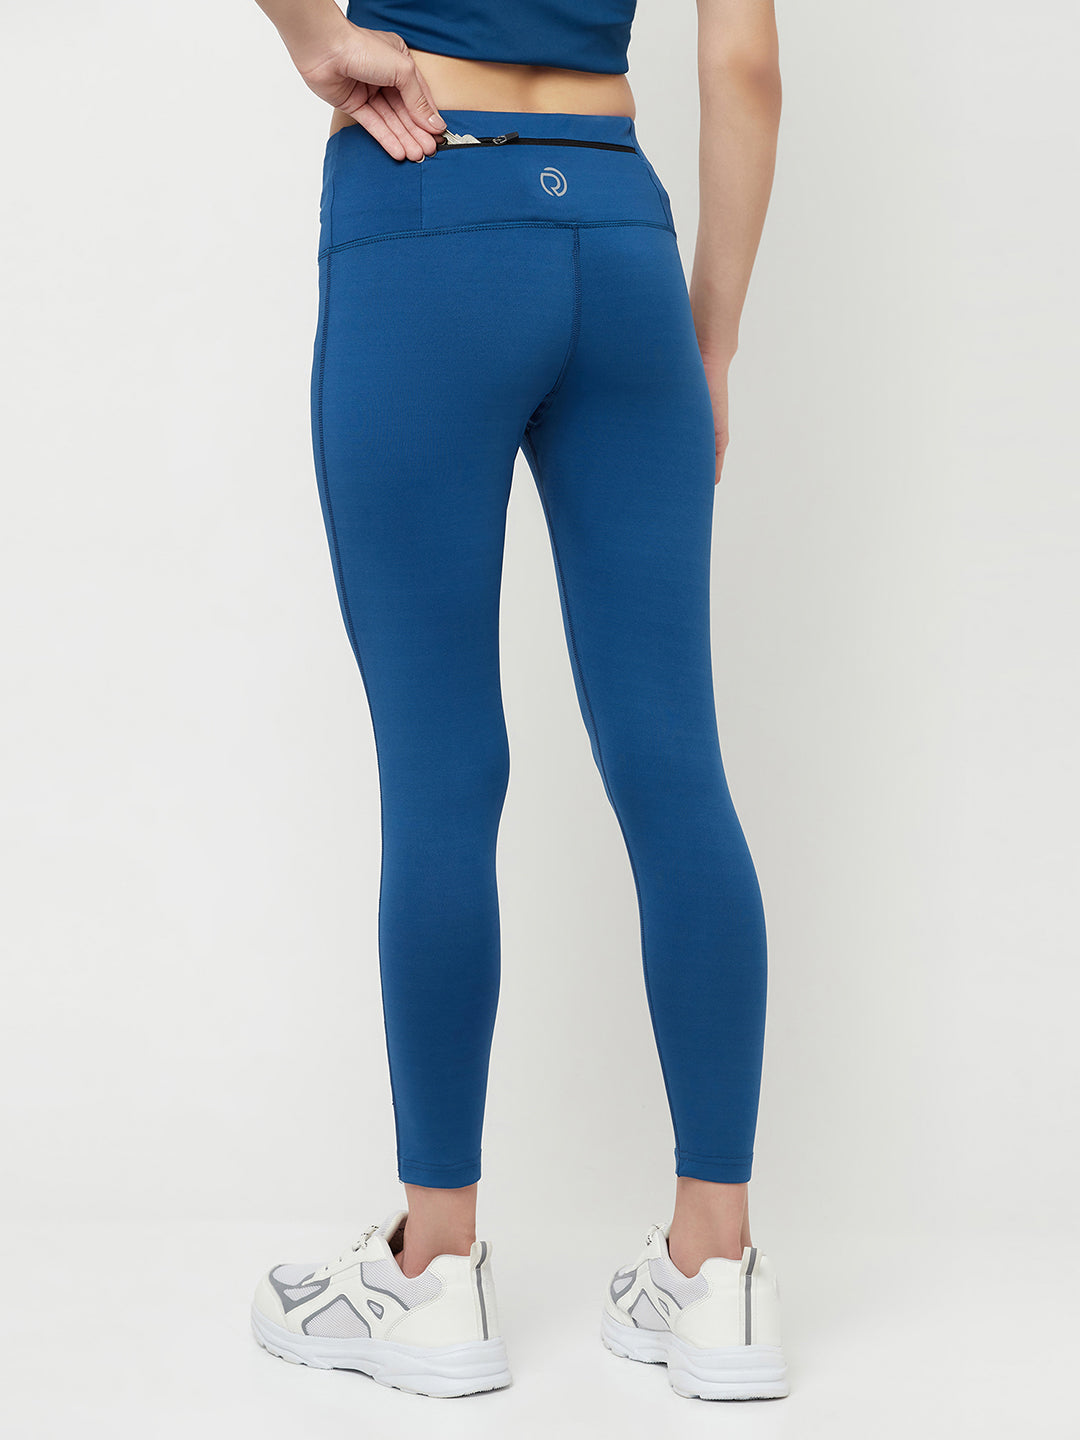 Phone pocket leggings & sports bra combo - Women's Poseidon Blue